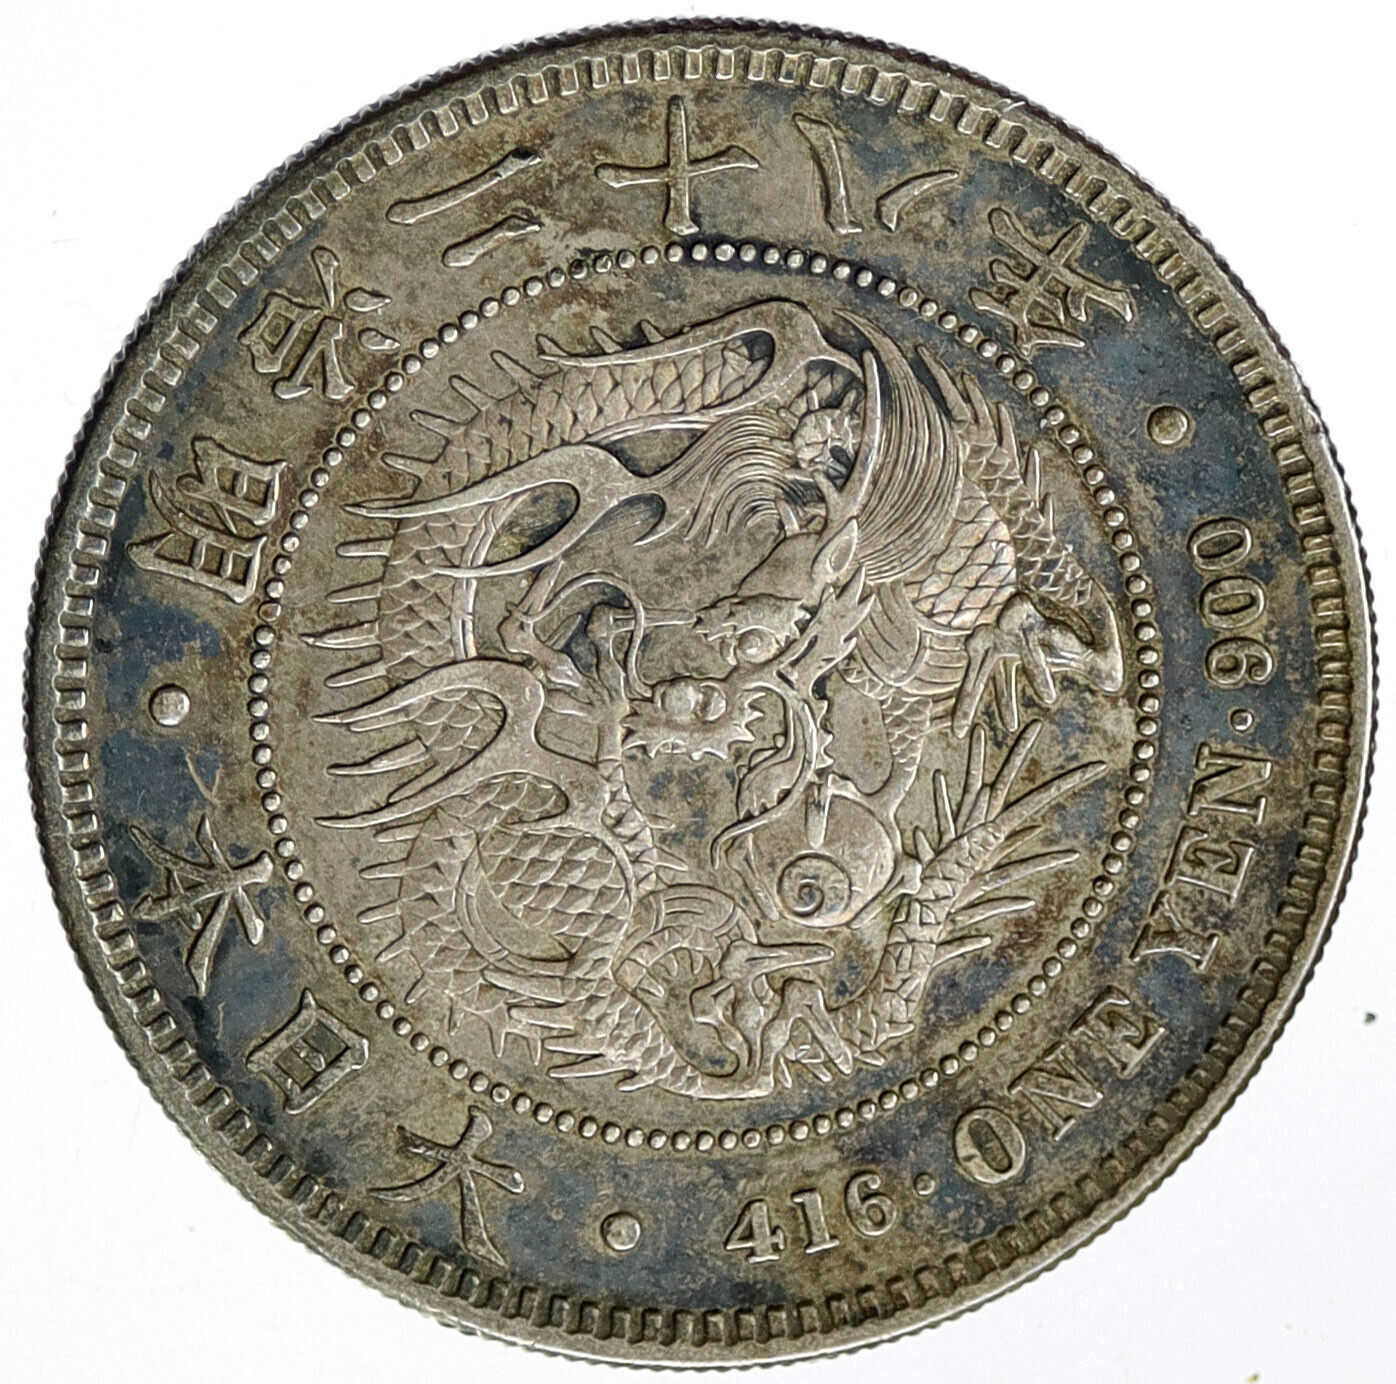 1895 Yr 28 JAPAN Emperor MEIJI Large Silver Yen Coin JAPANESE DRAGON i117625